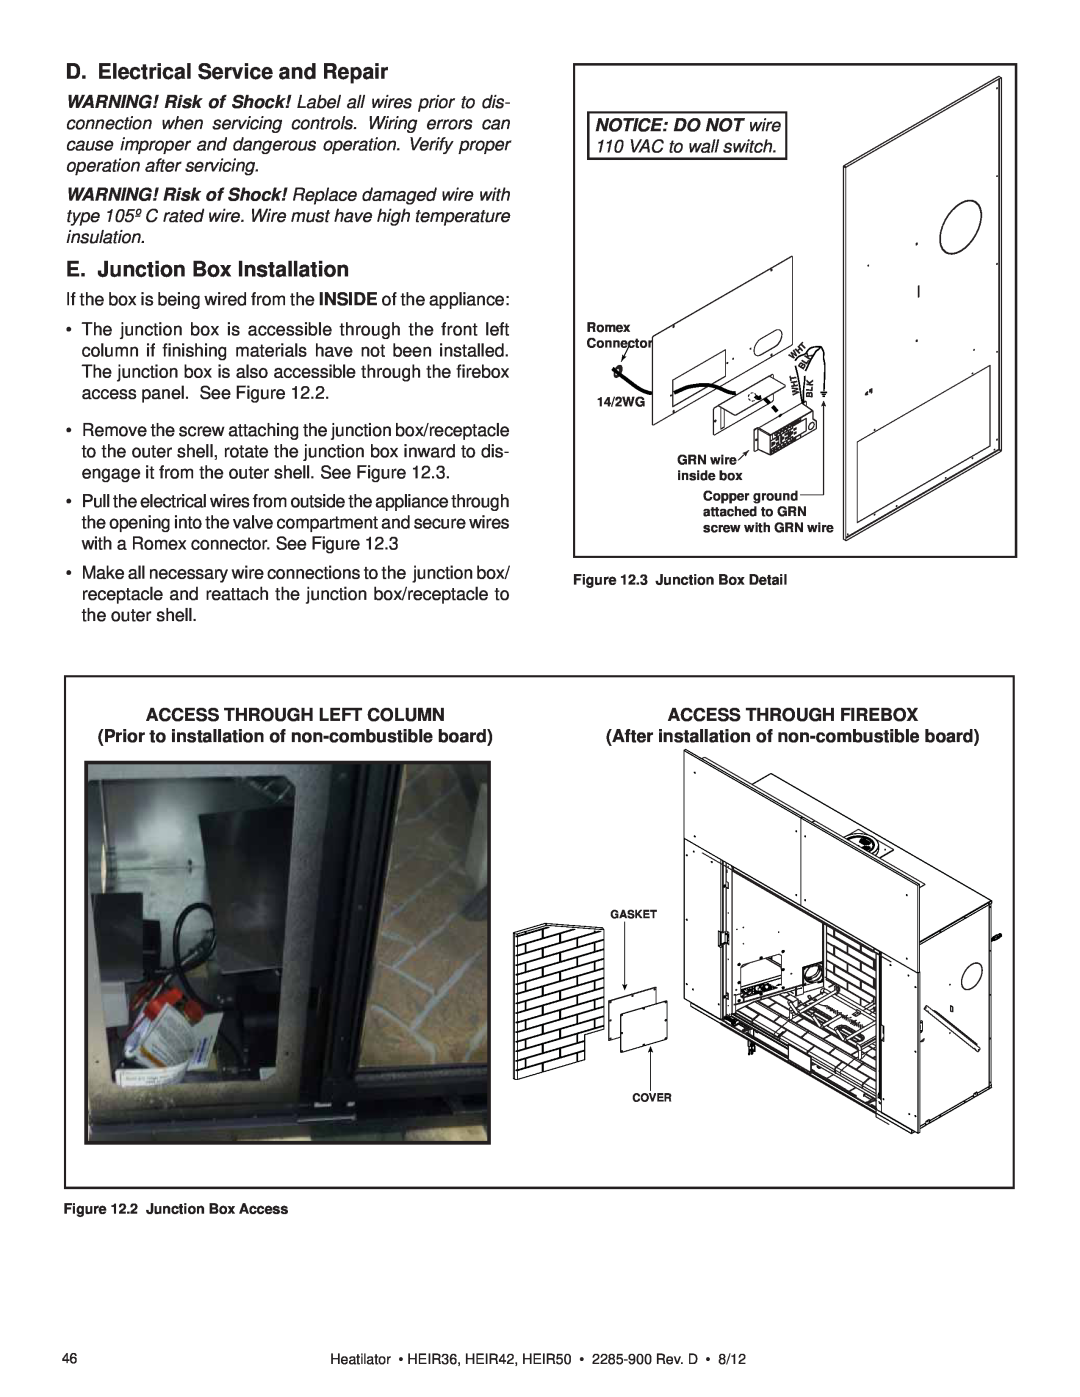 Heatiator HEIR36T, HEIR42H D. Electrical Service and Repair, E. Junction Box Installation, Access Through Left Column 